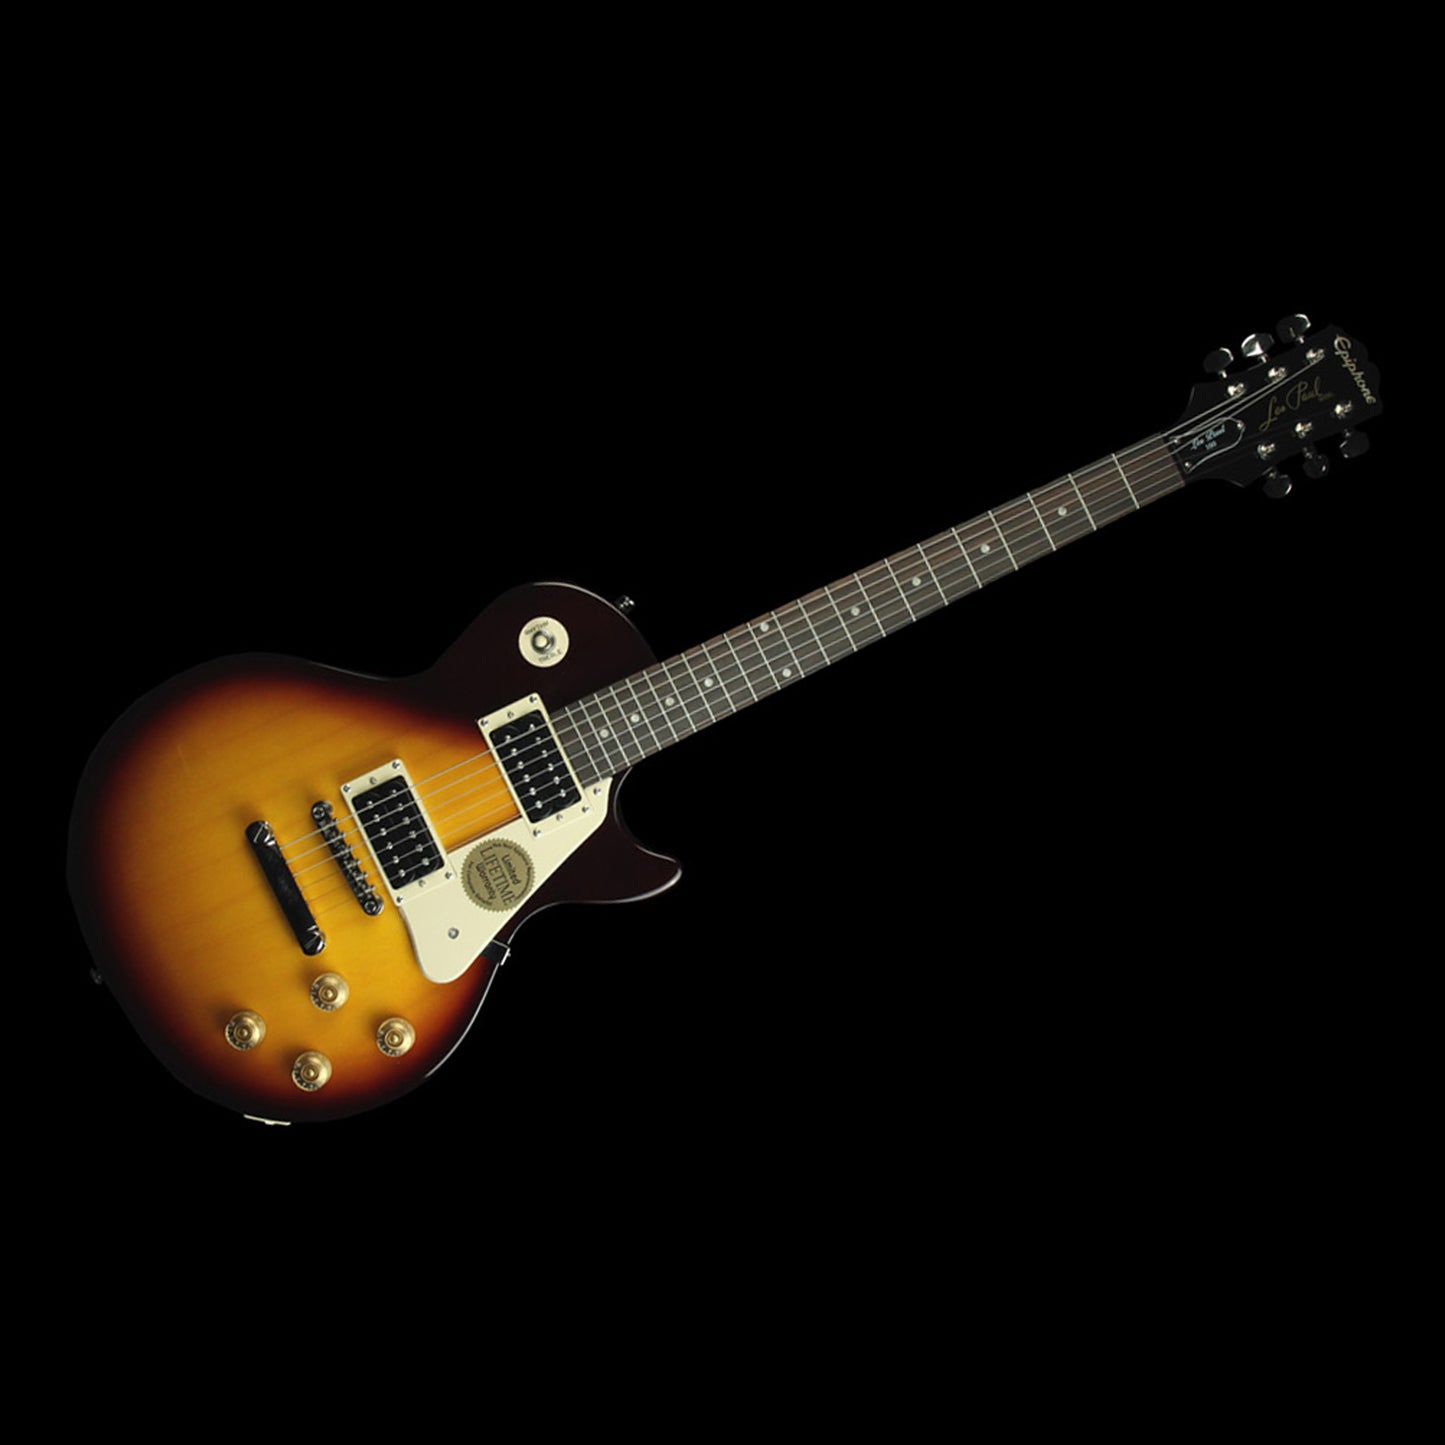 Epiphone Les Paul 100 Guitar in Vintage Sunburst